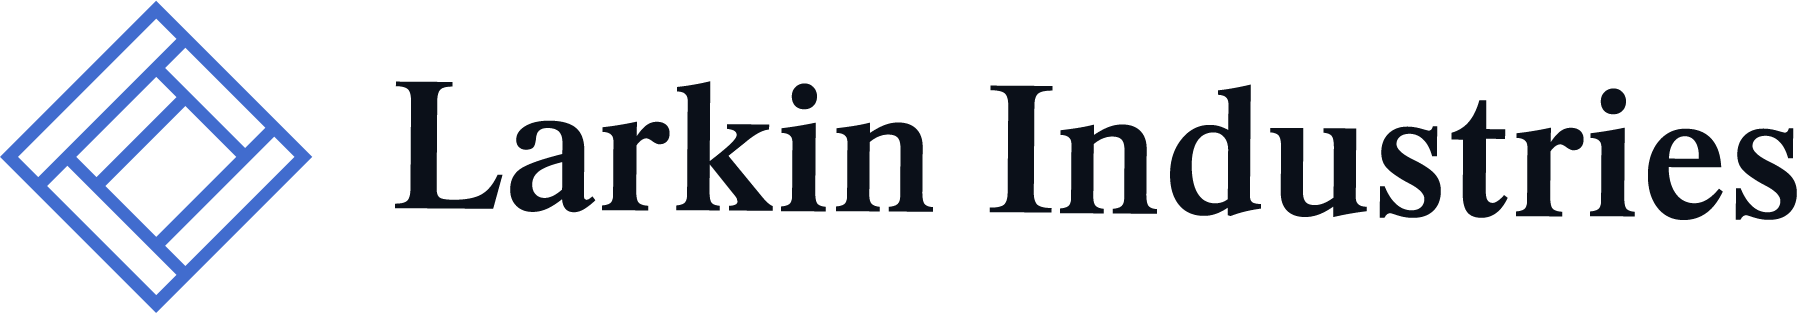 Our Process – Larkin Industries